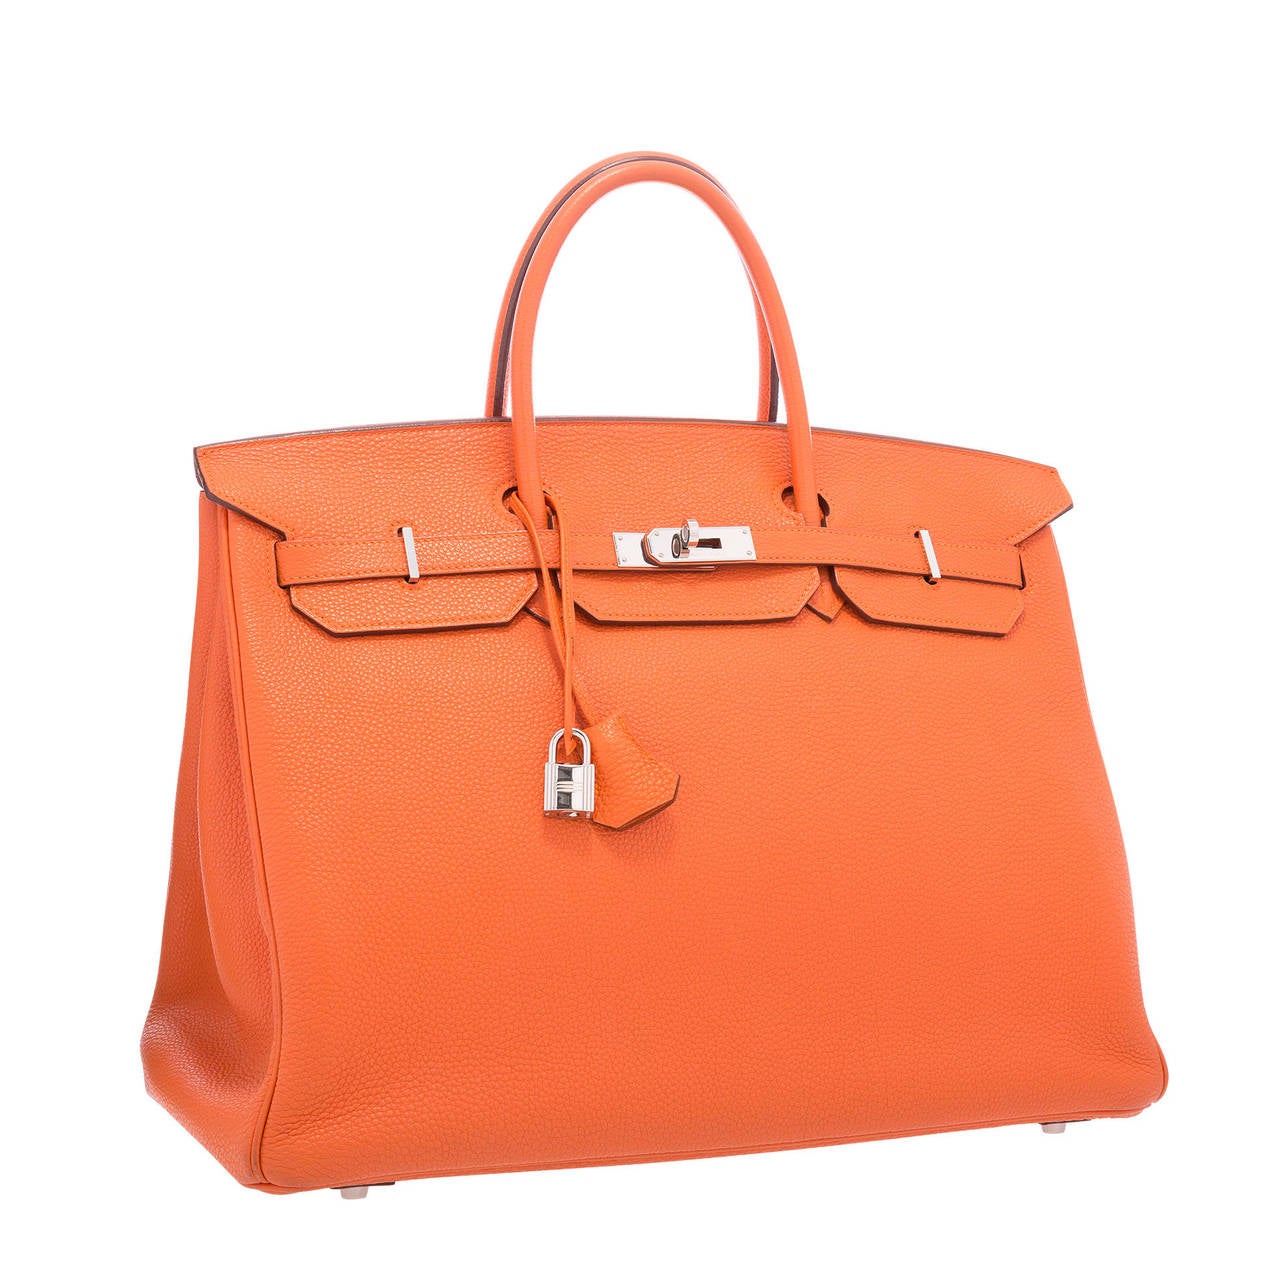 Hermes 40cm Orange H Togo Leather Birkin Bag with Palladium Hardware For Sale